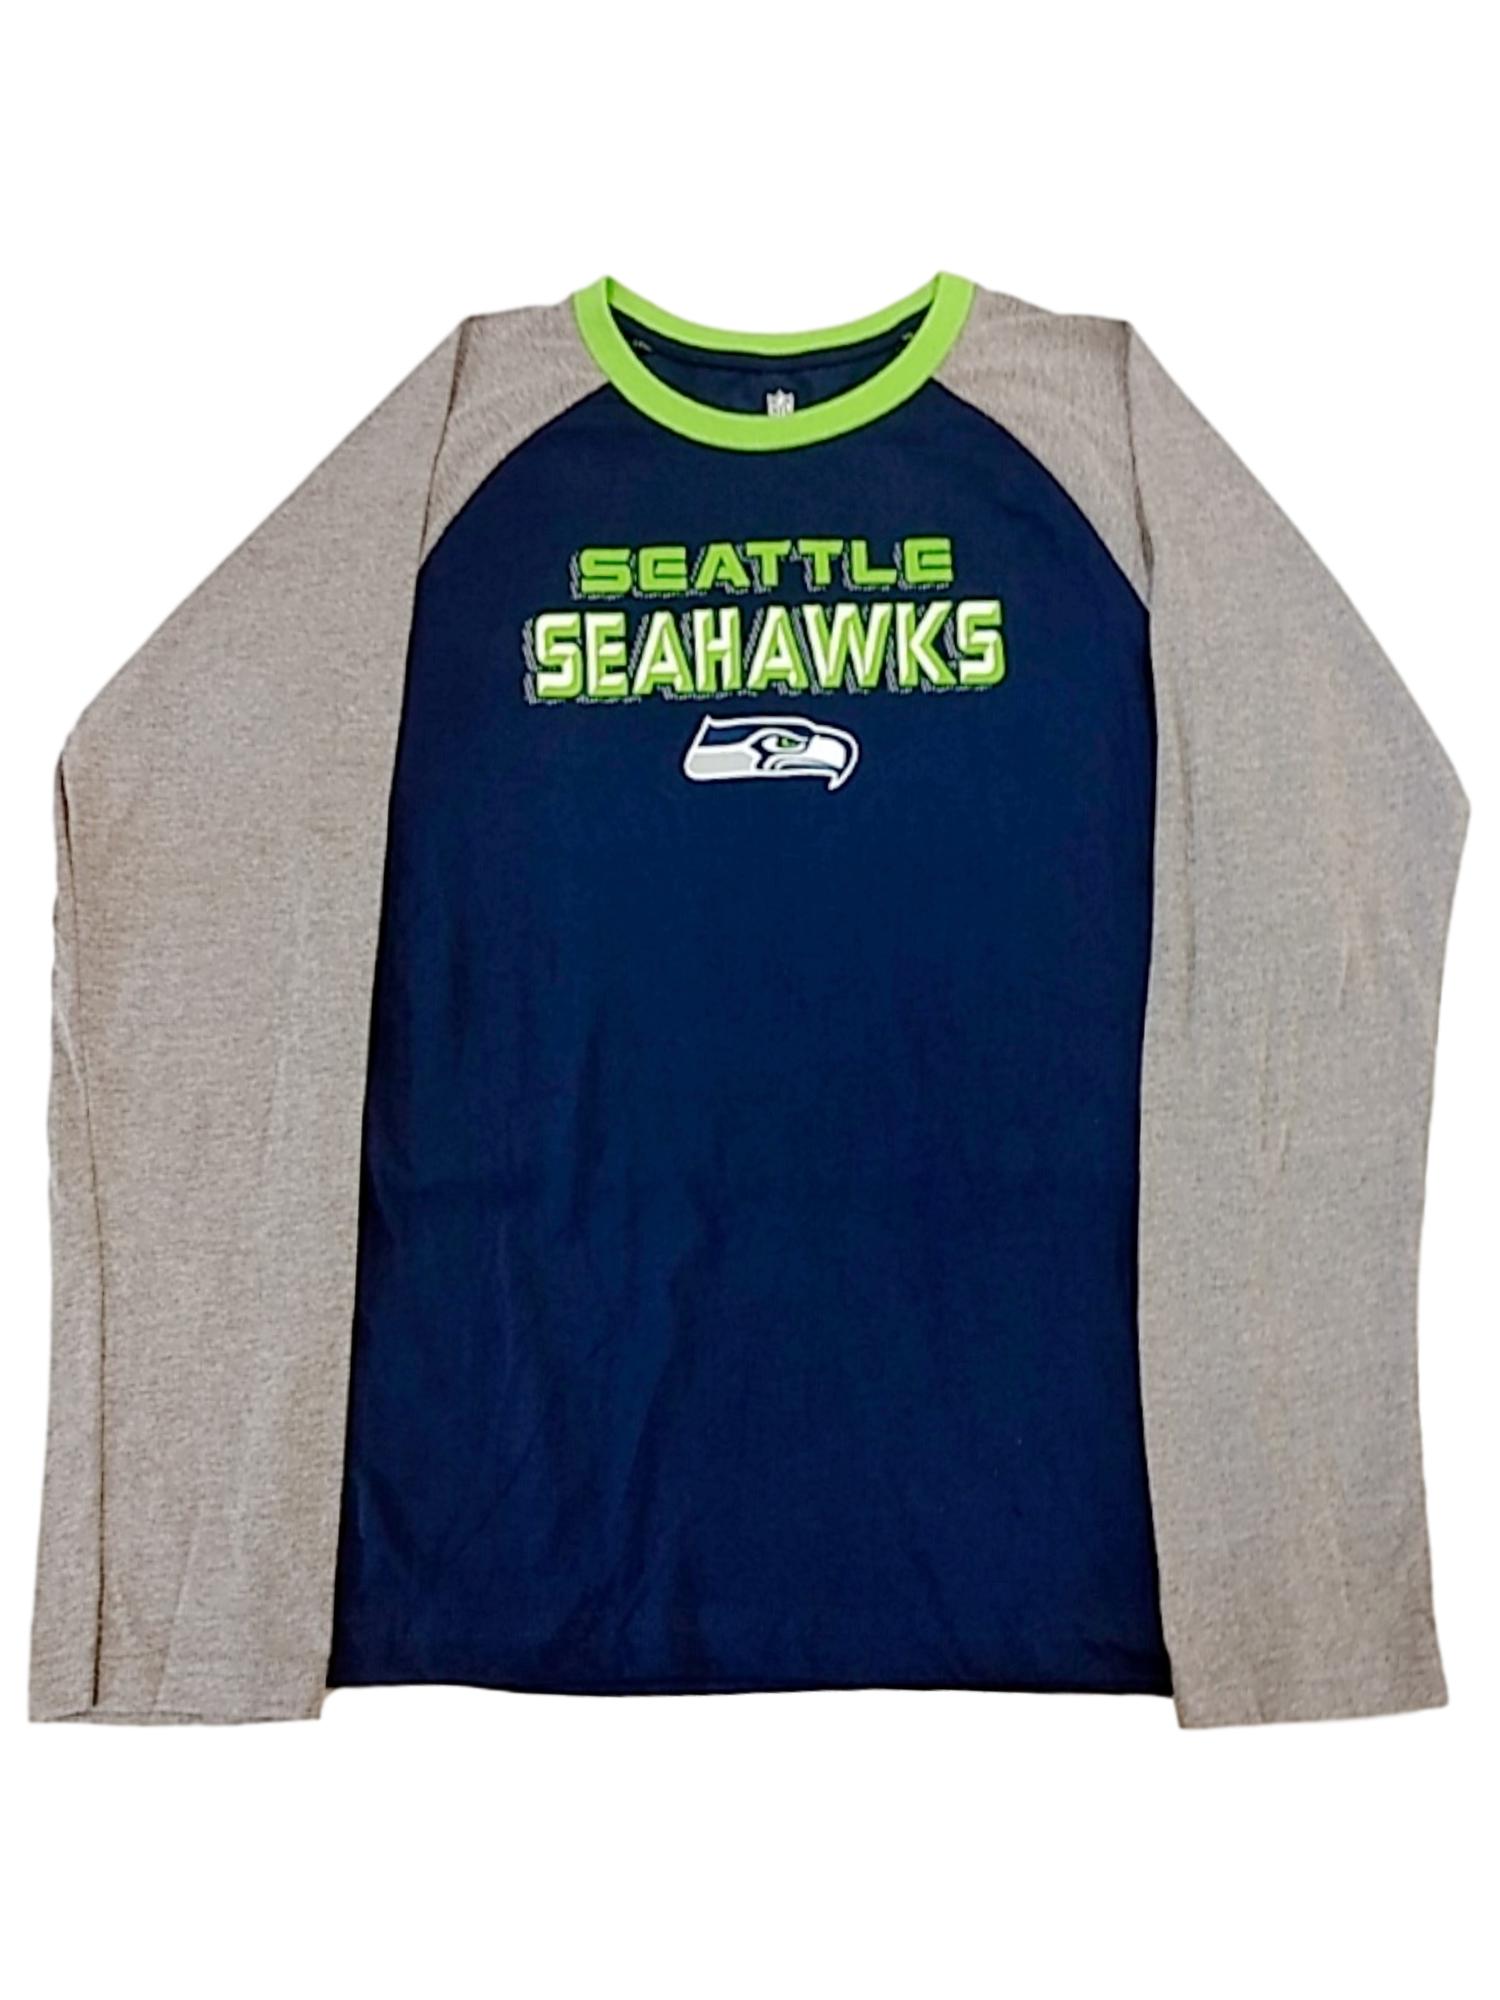 SEAHAWKS Boys Seattle Seahawks Blue & Green Long Sleeve Tee Shirt Football NFL T-Shirt XL